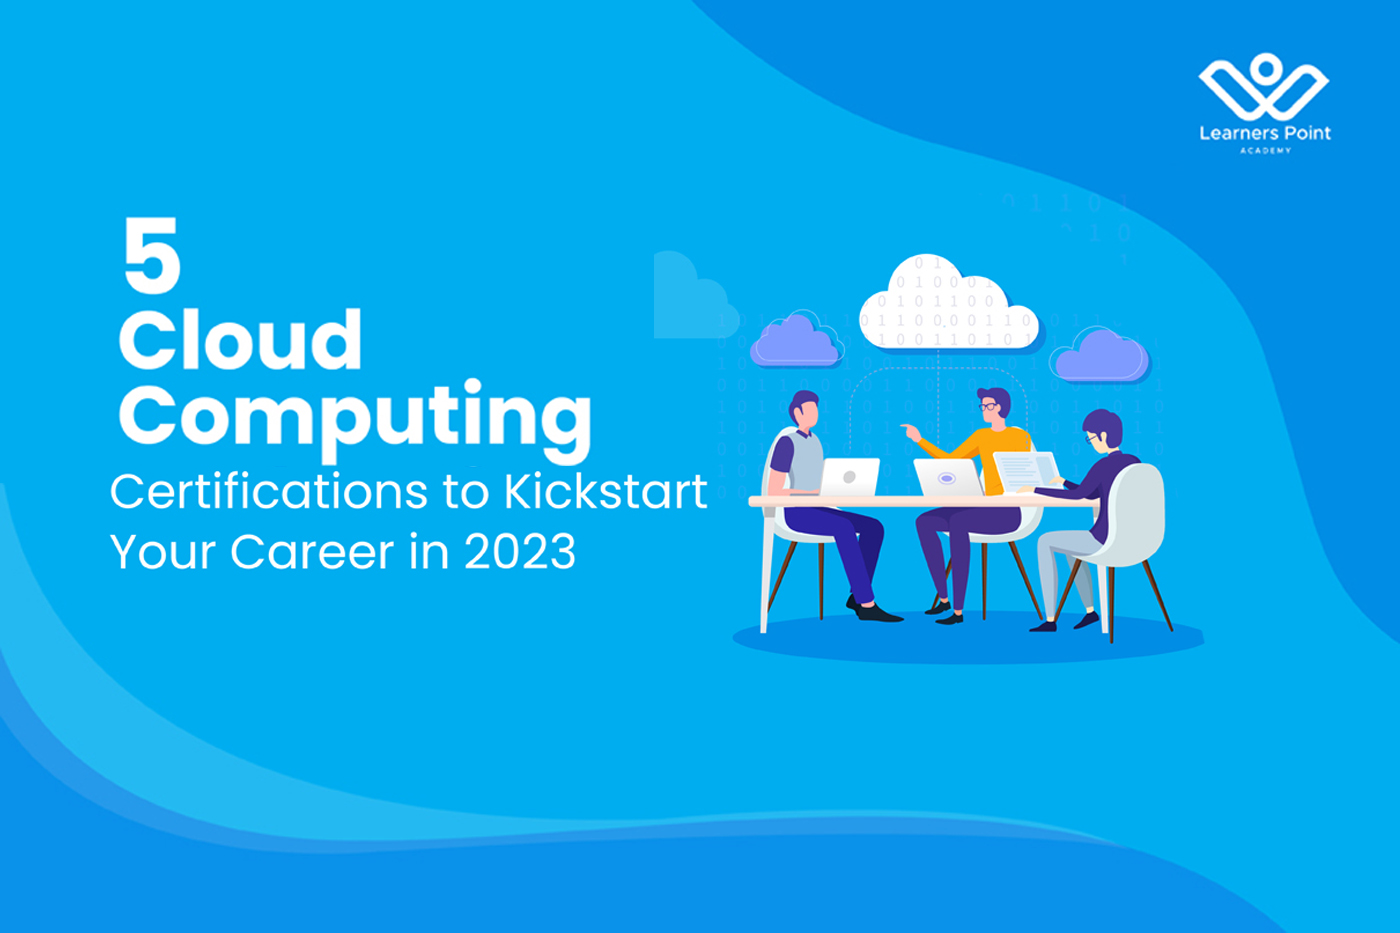 5 Cloud Computing Certifications to Kickstart your Career in 2023